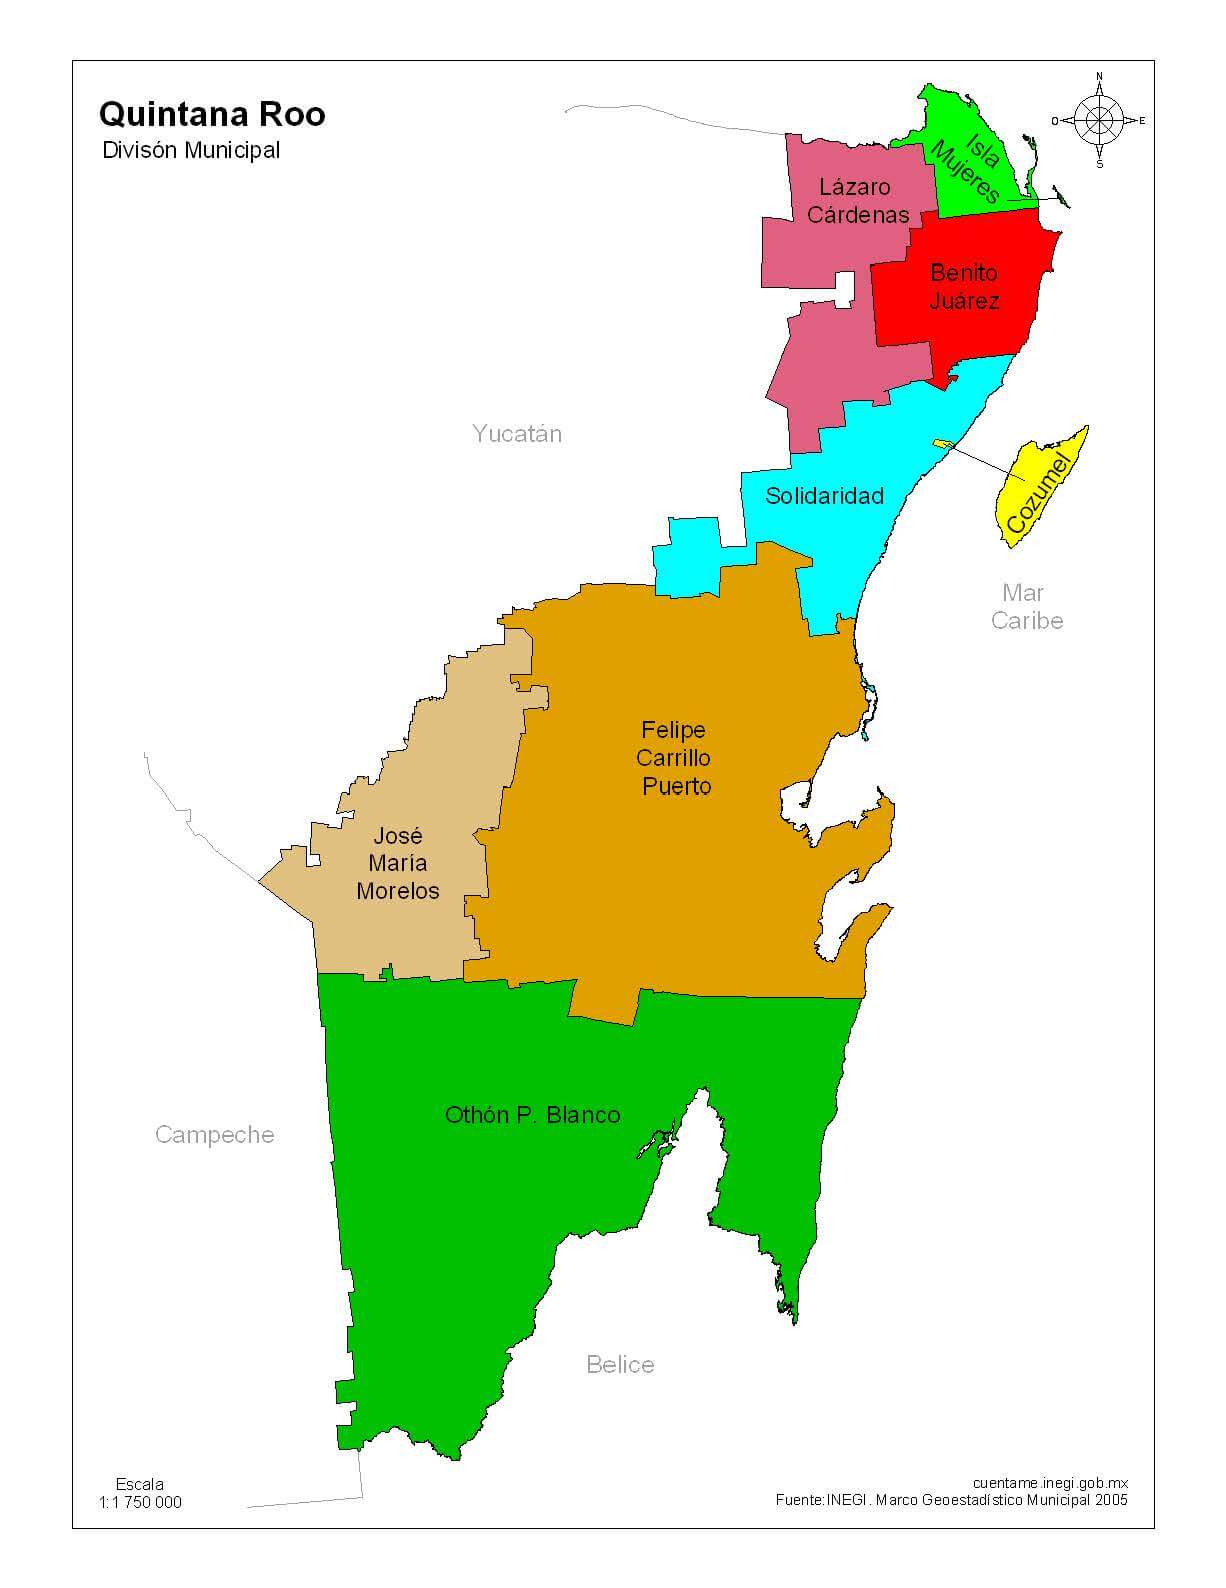 mapa de quintanaroo con división 
política